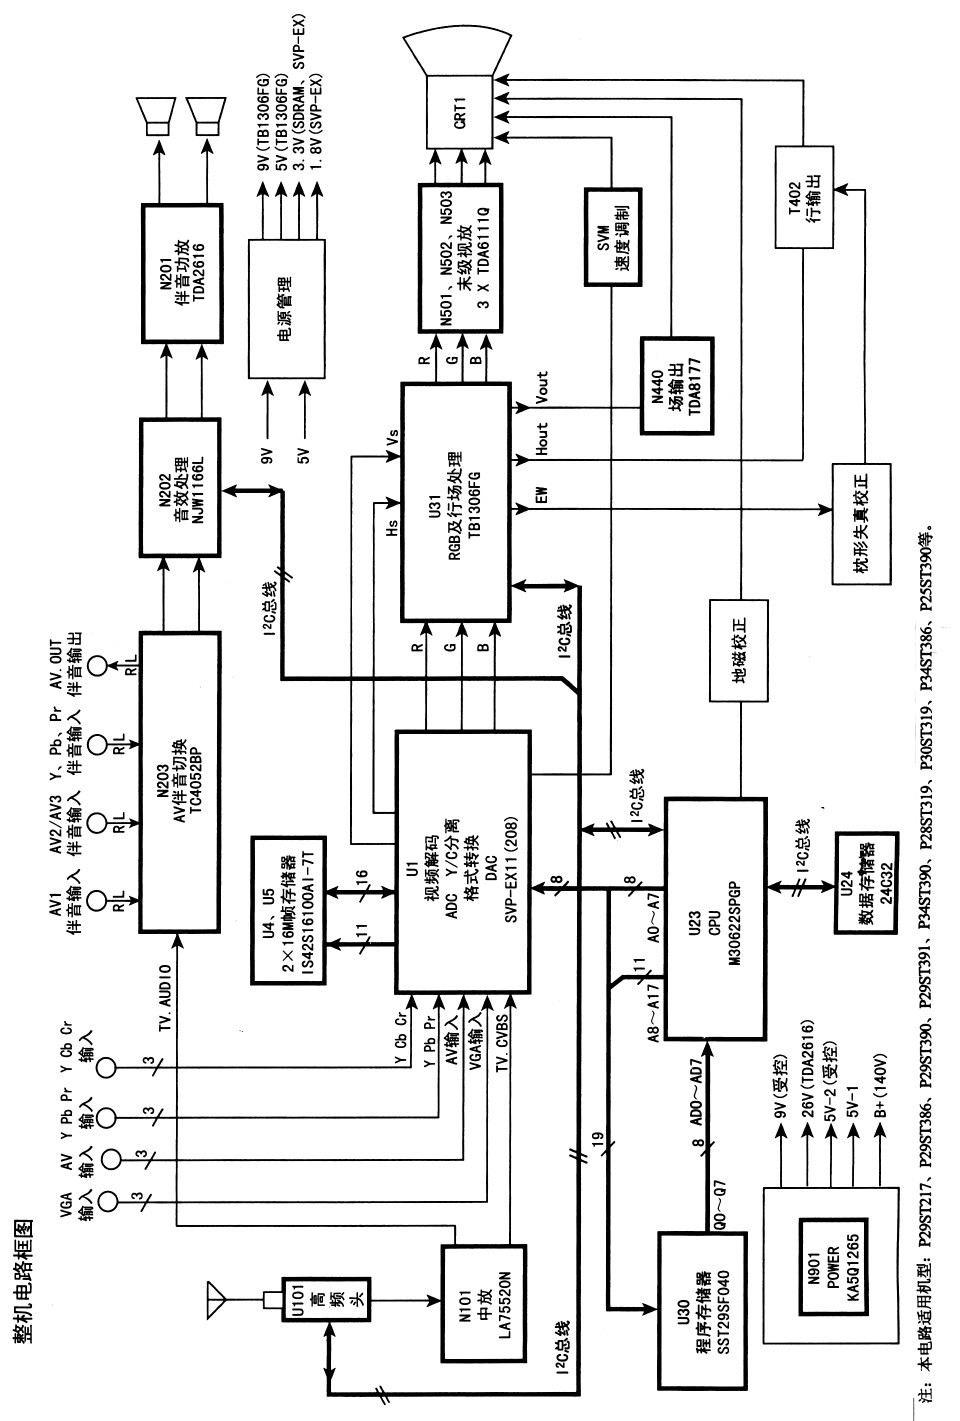 Konka P29ST217 high-definition digital CRT color TV circuit schematic (1)